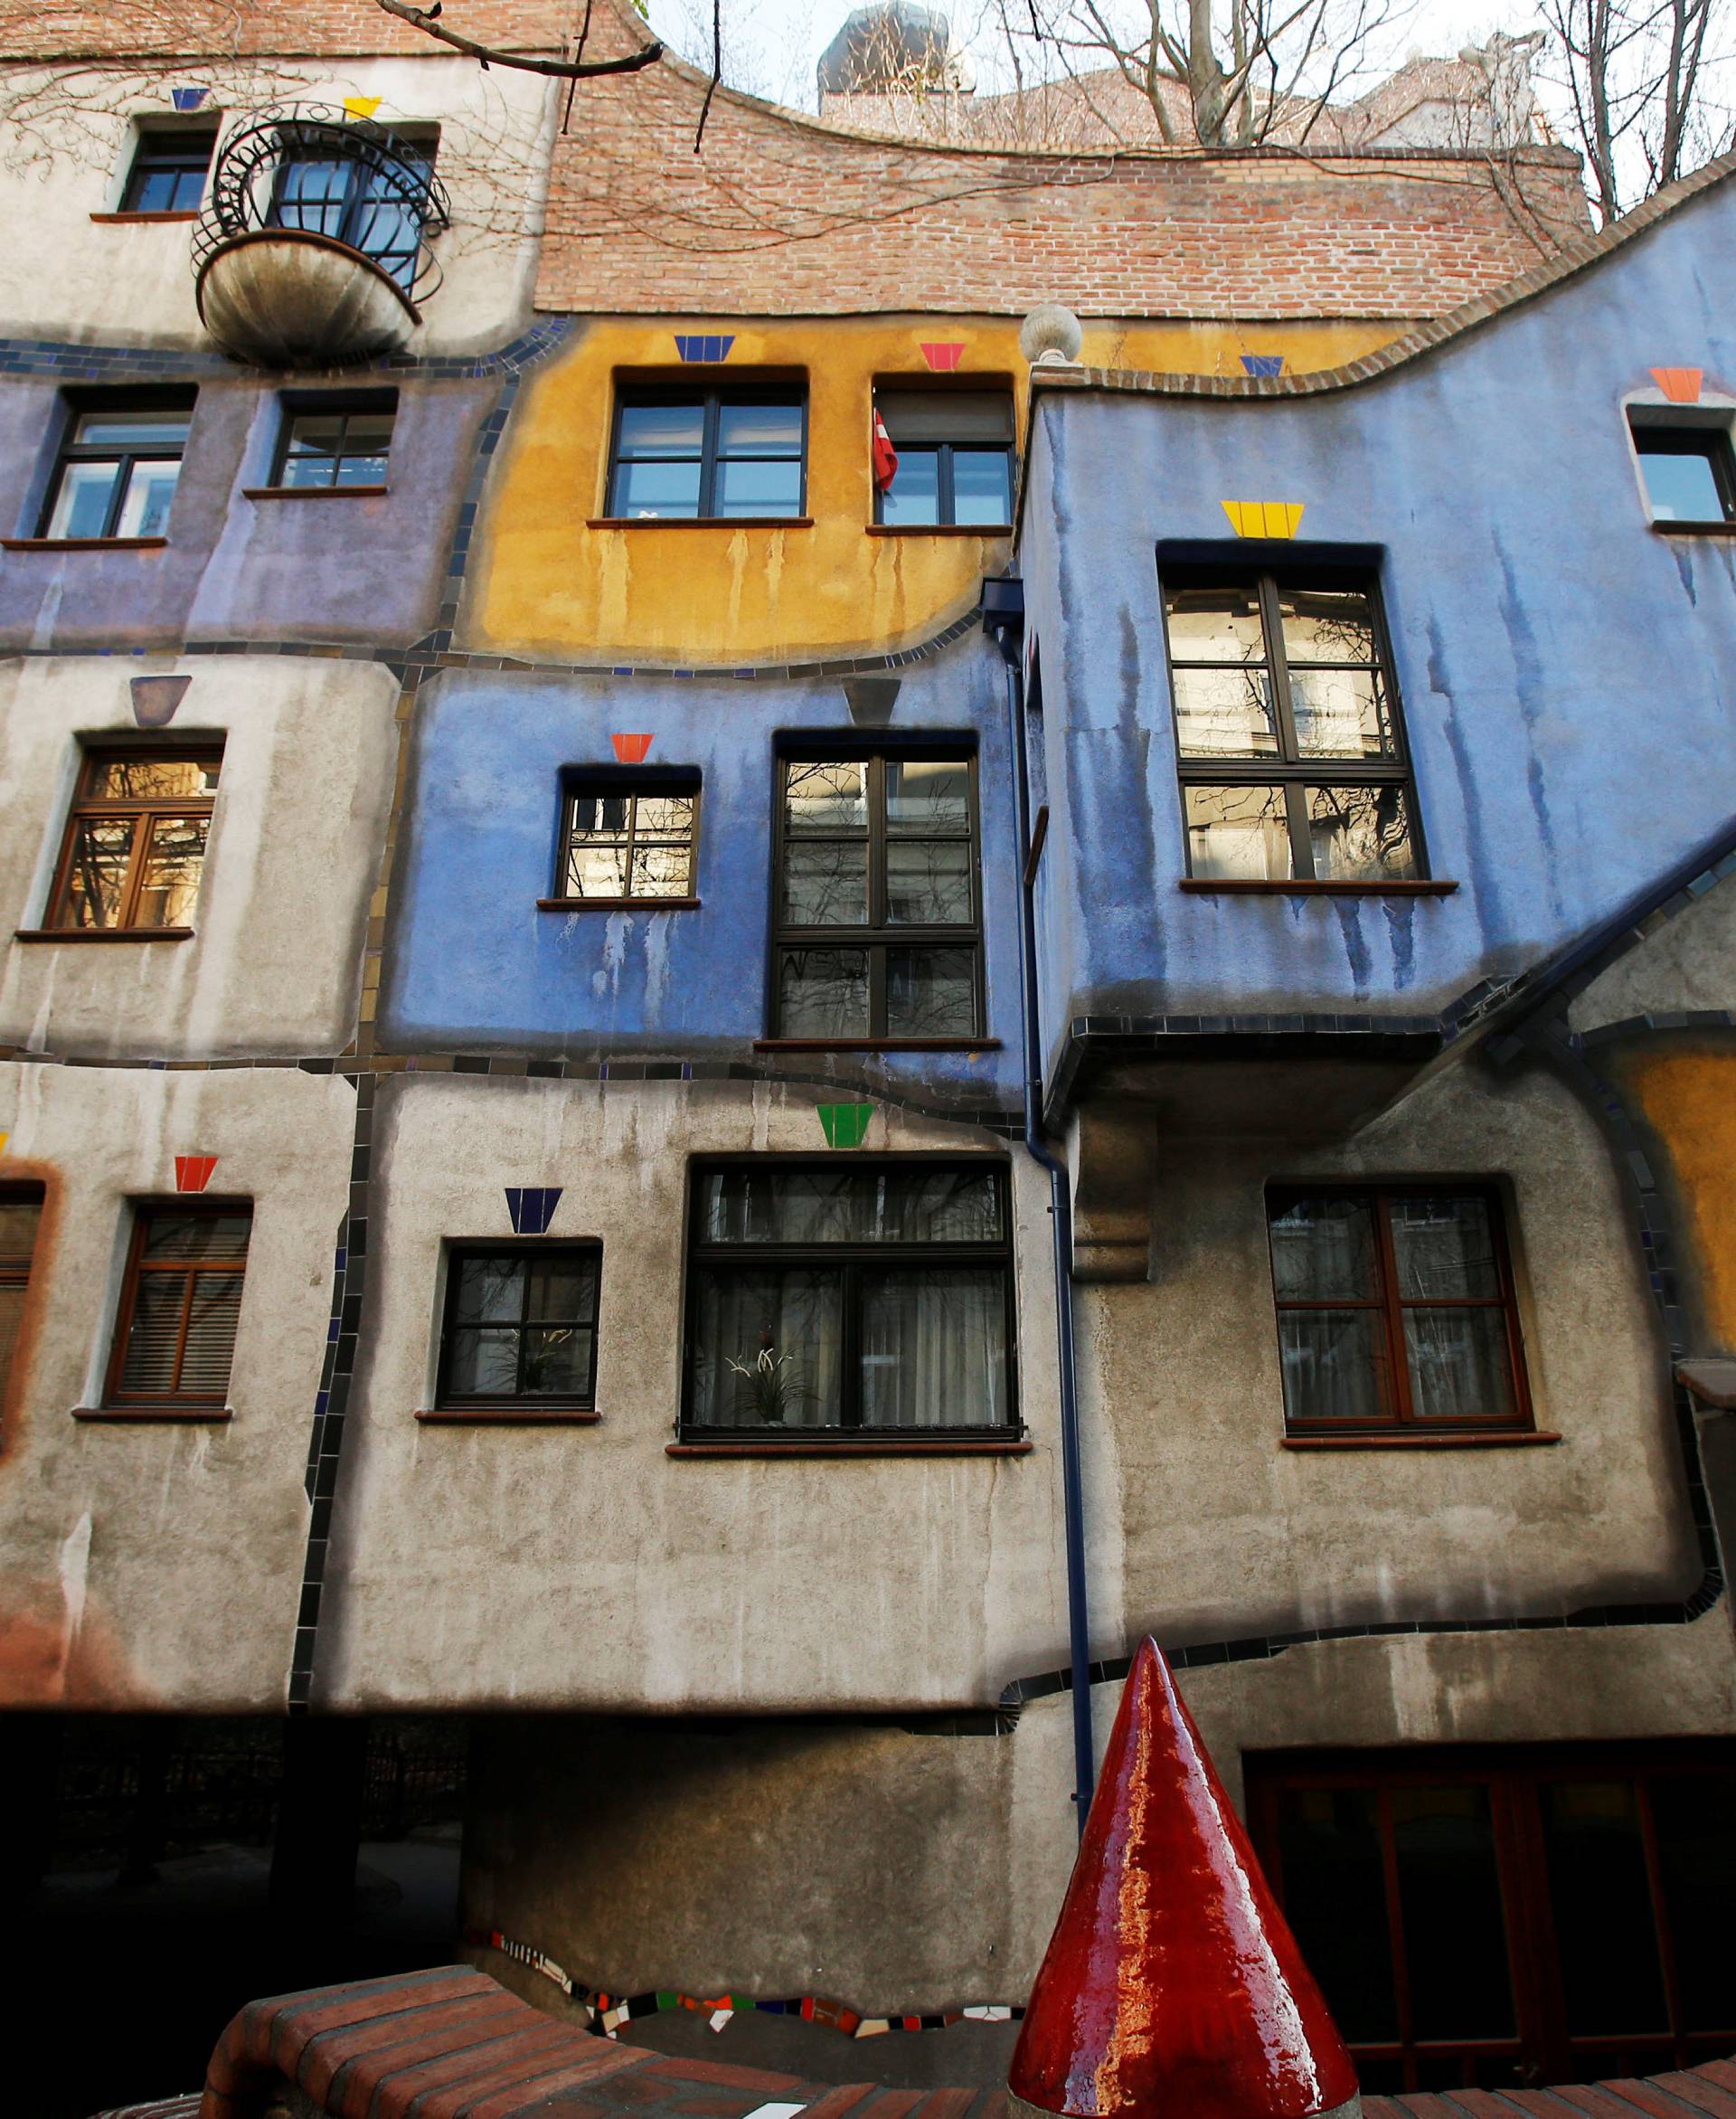 The Hundertwasser House landmark is seen in Vienna